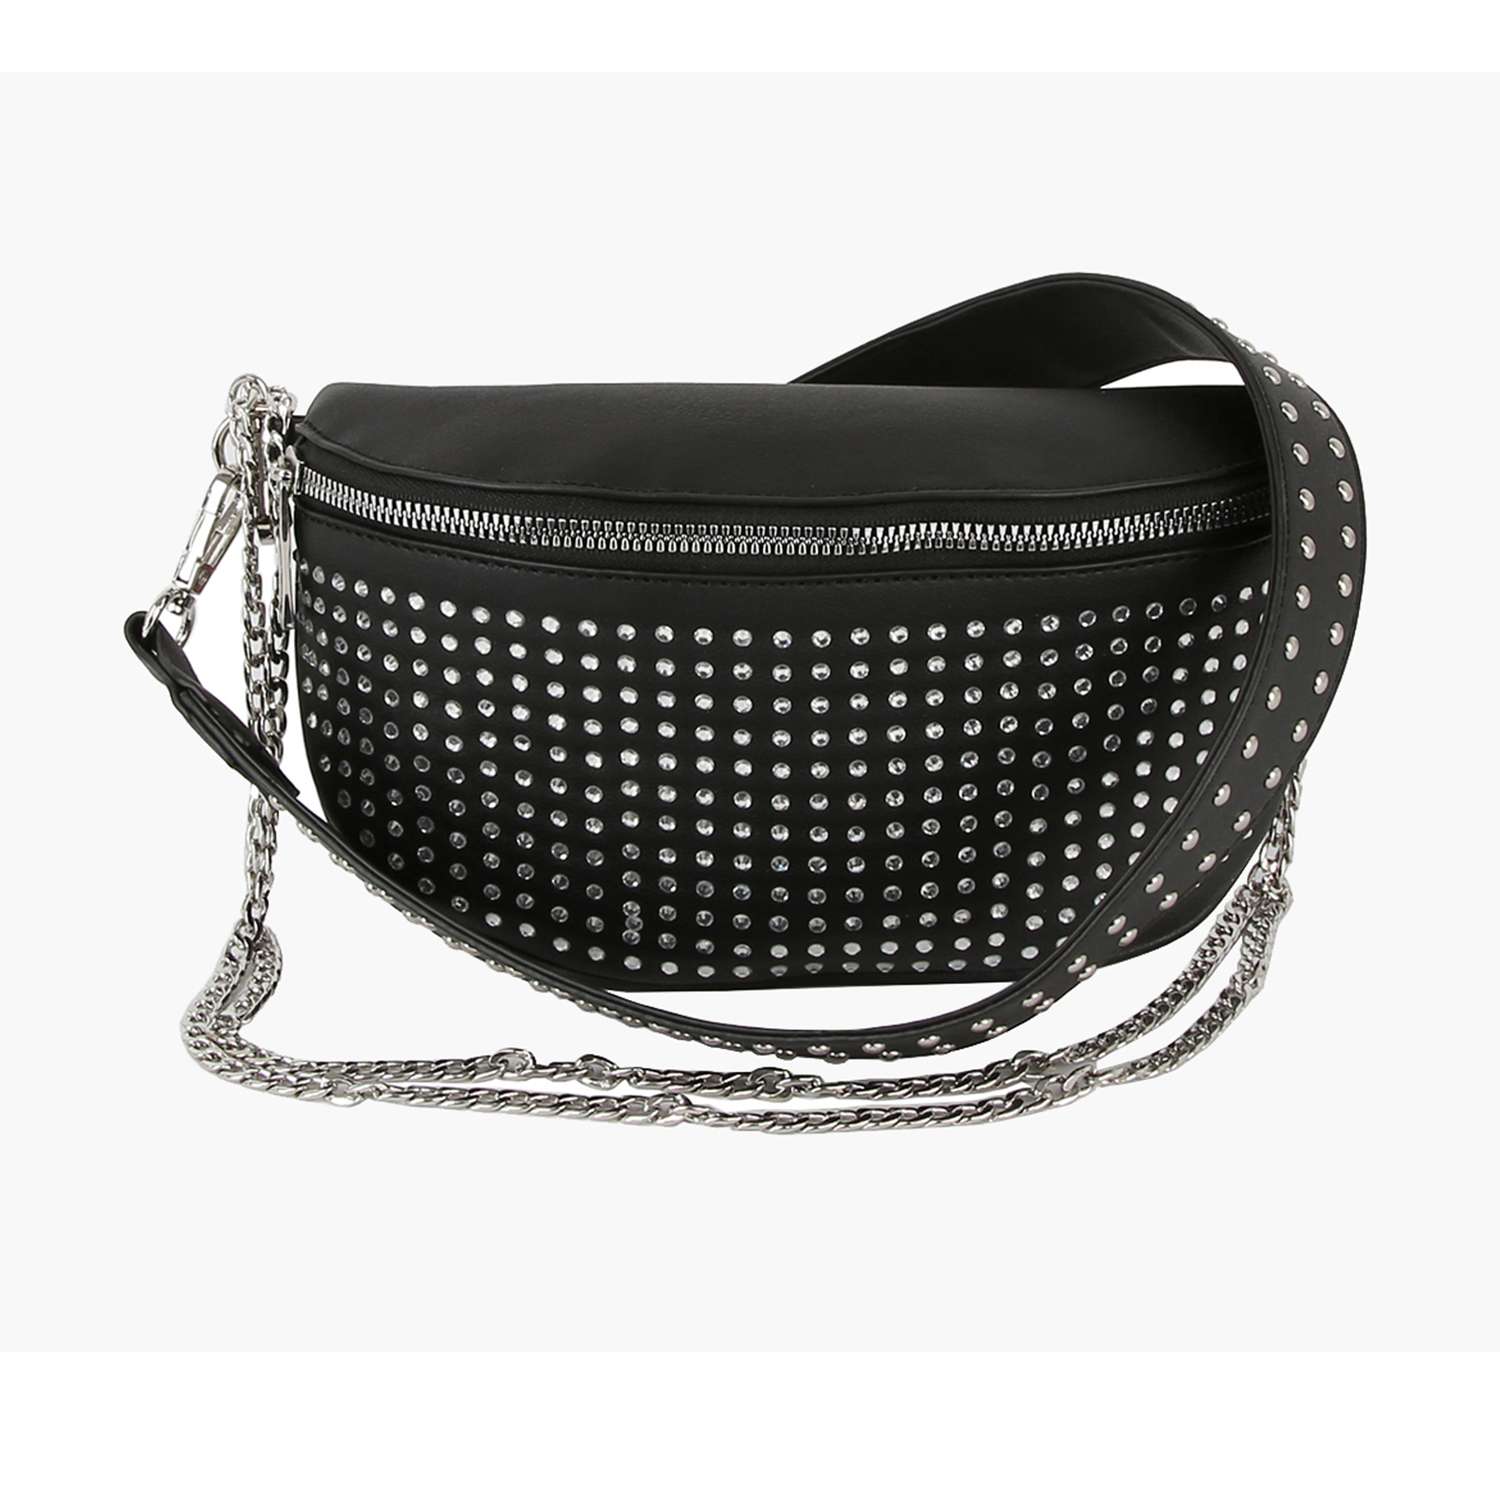 Stylish Studded Crossbody Bag: Black - Coco and lulu boutique 